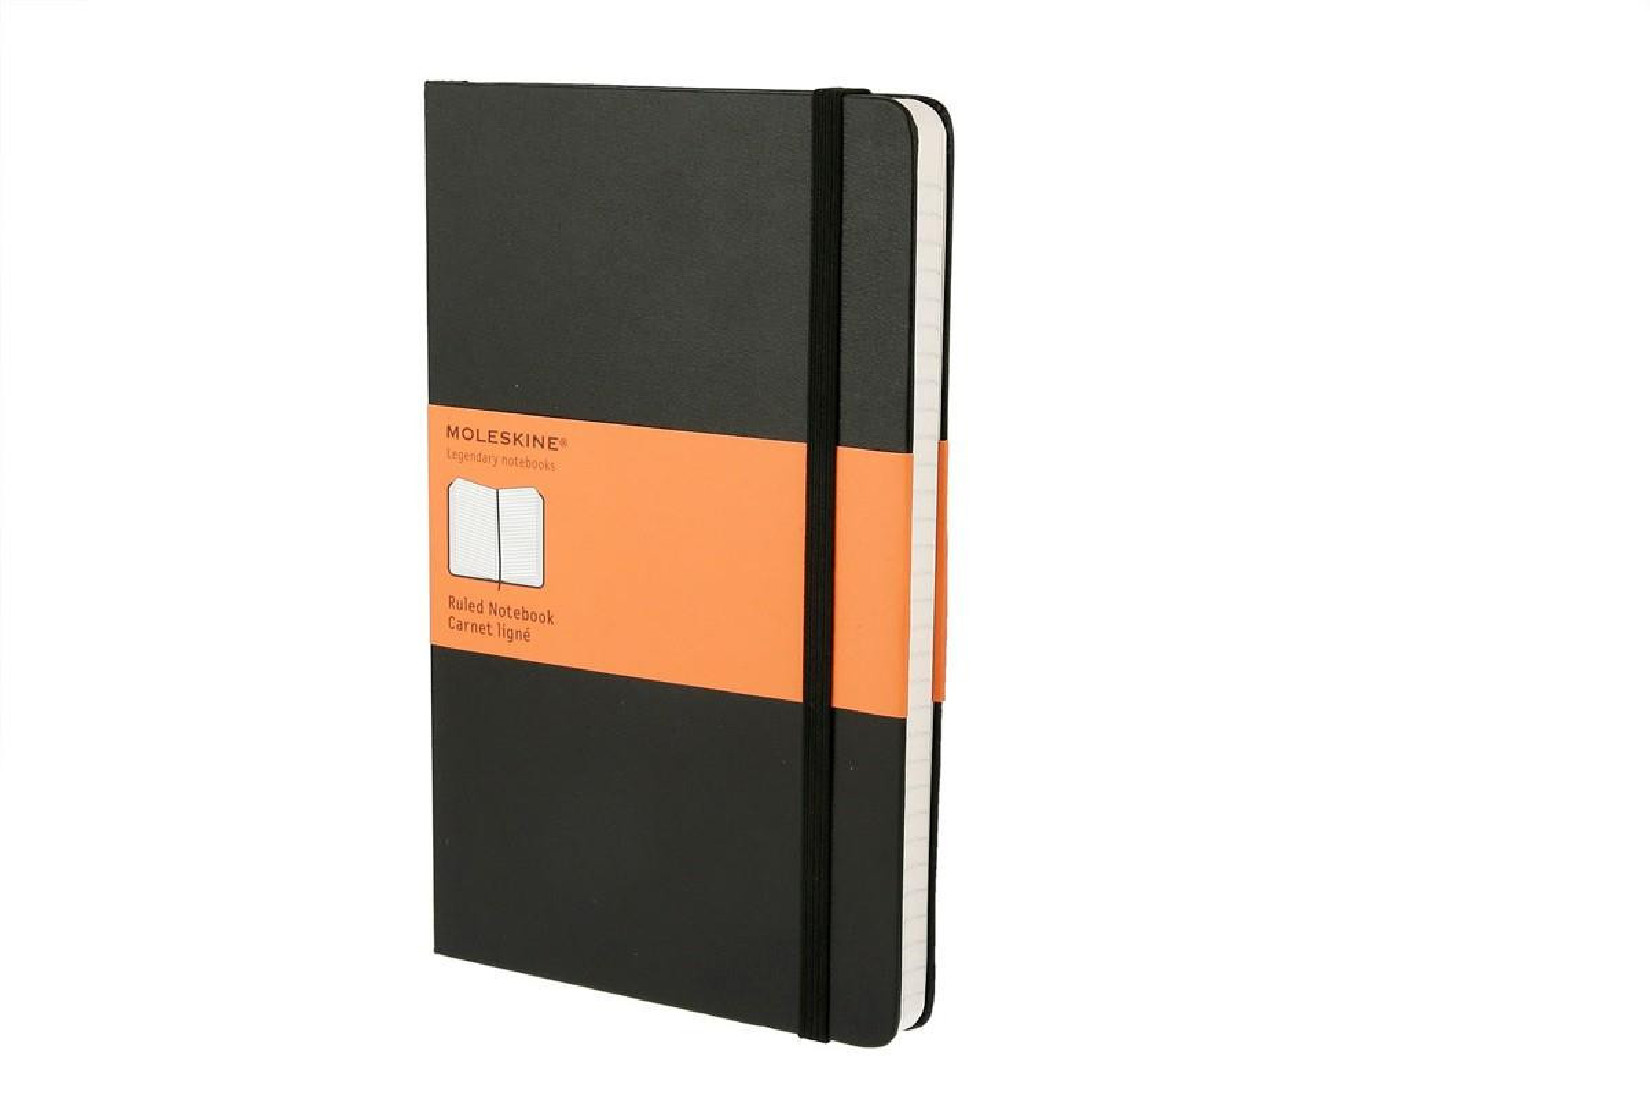 Notebook Large 13x21 Ruled Black Hard Cover Moleskine